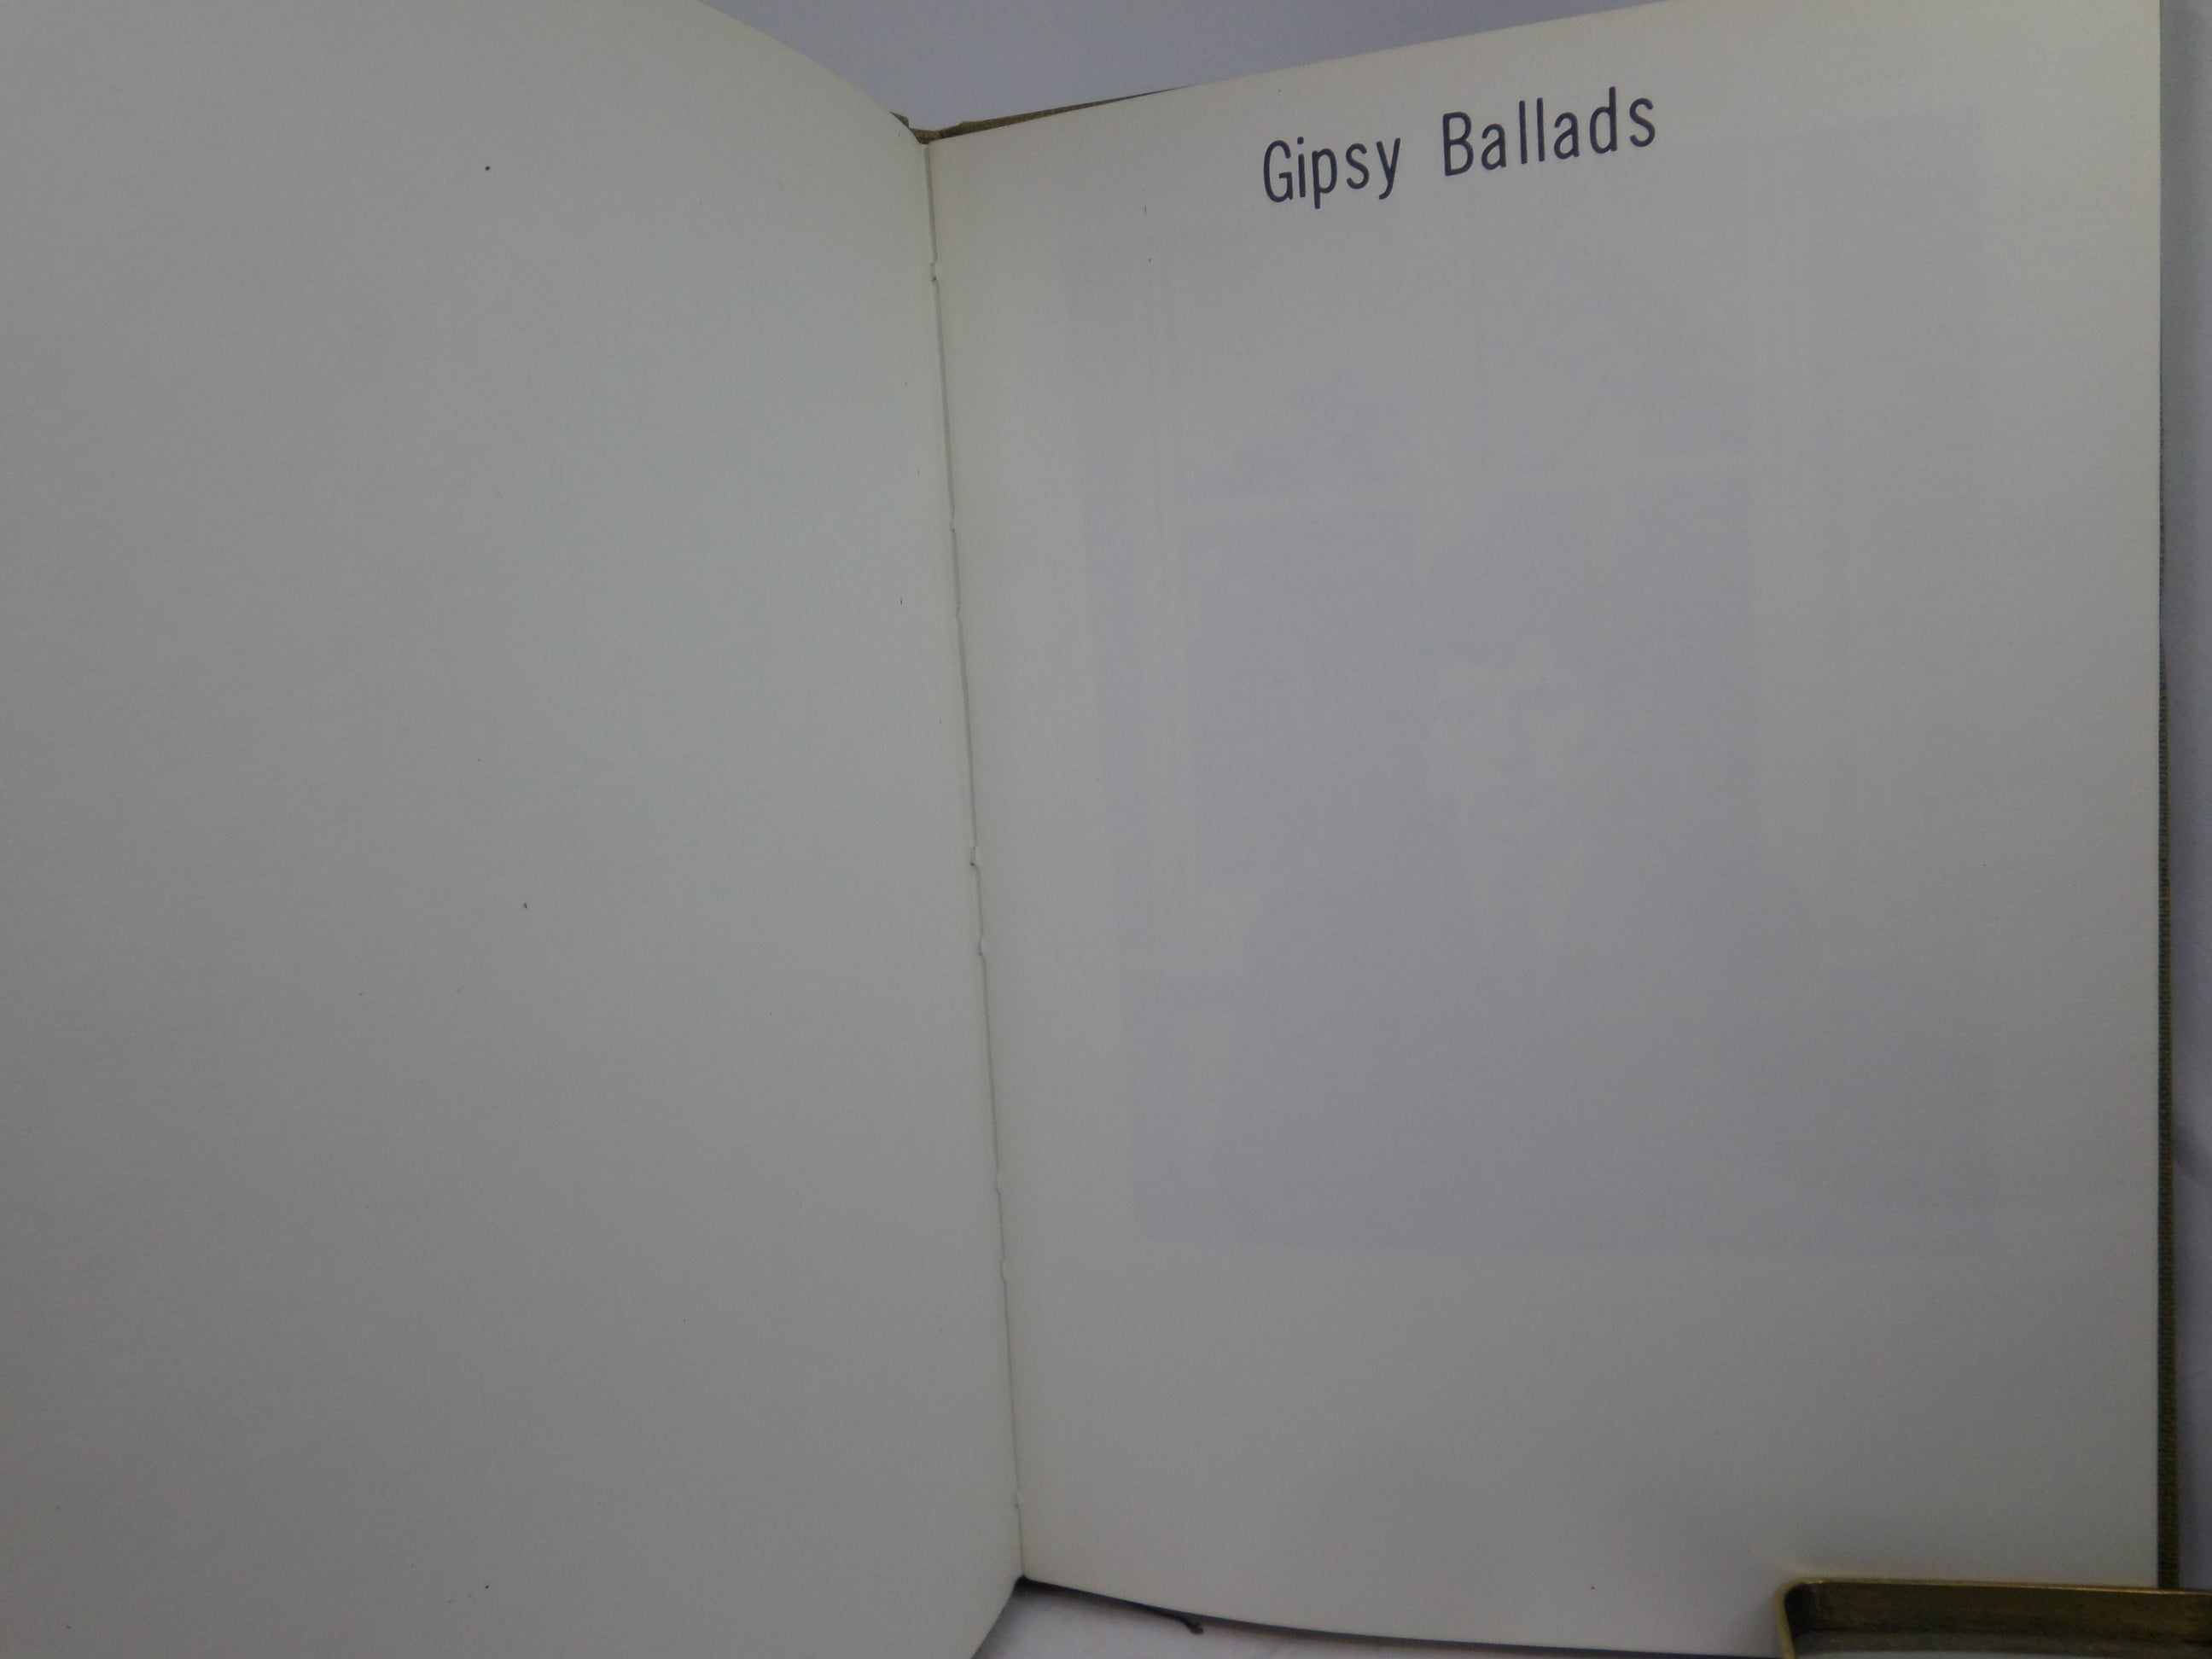 GIPSY BALLADS BY MICHAEL HARTNETT 1973 FIRST EDITION